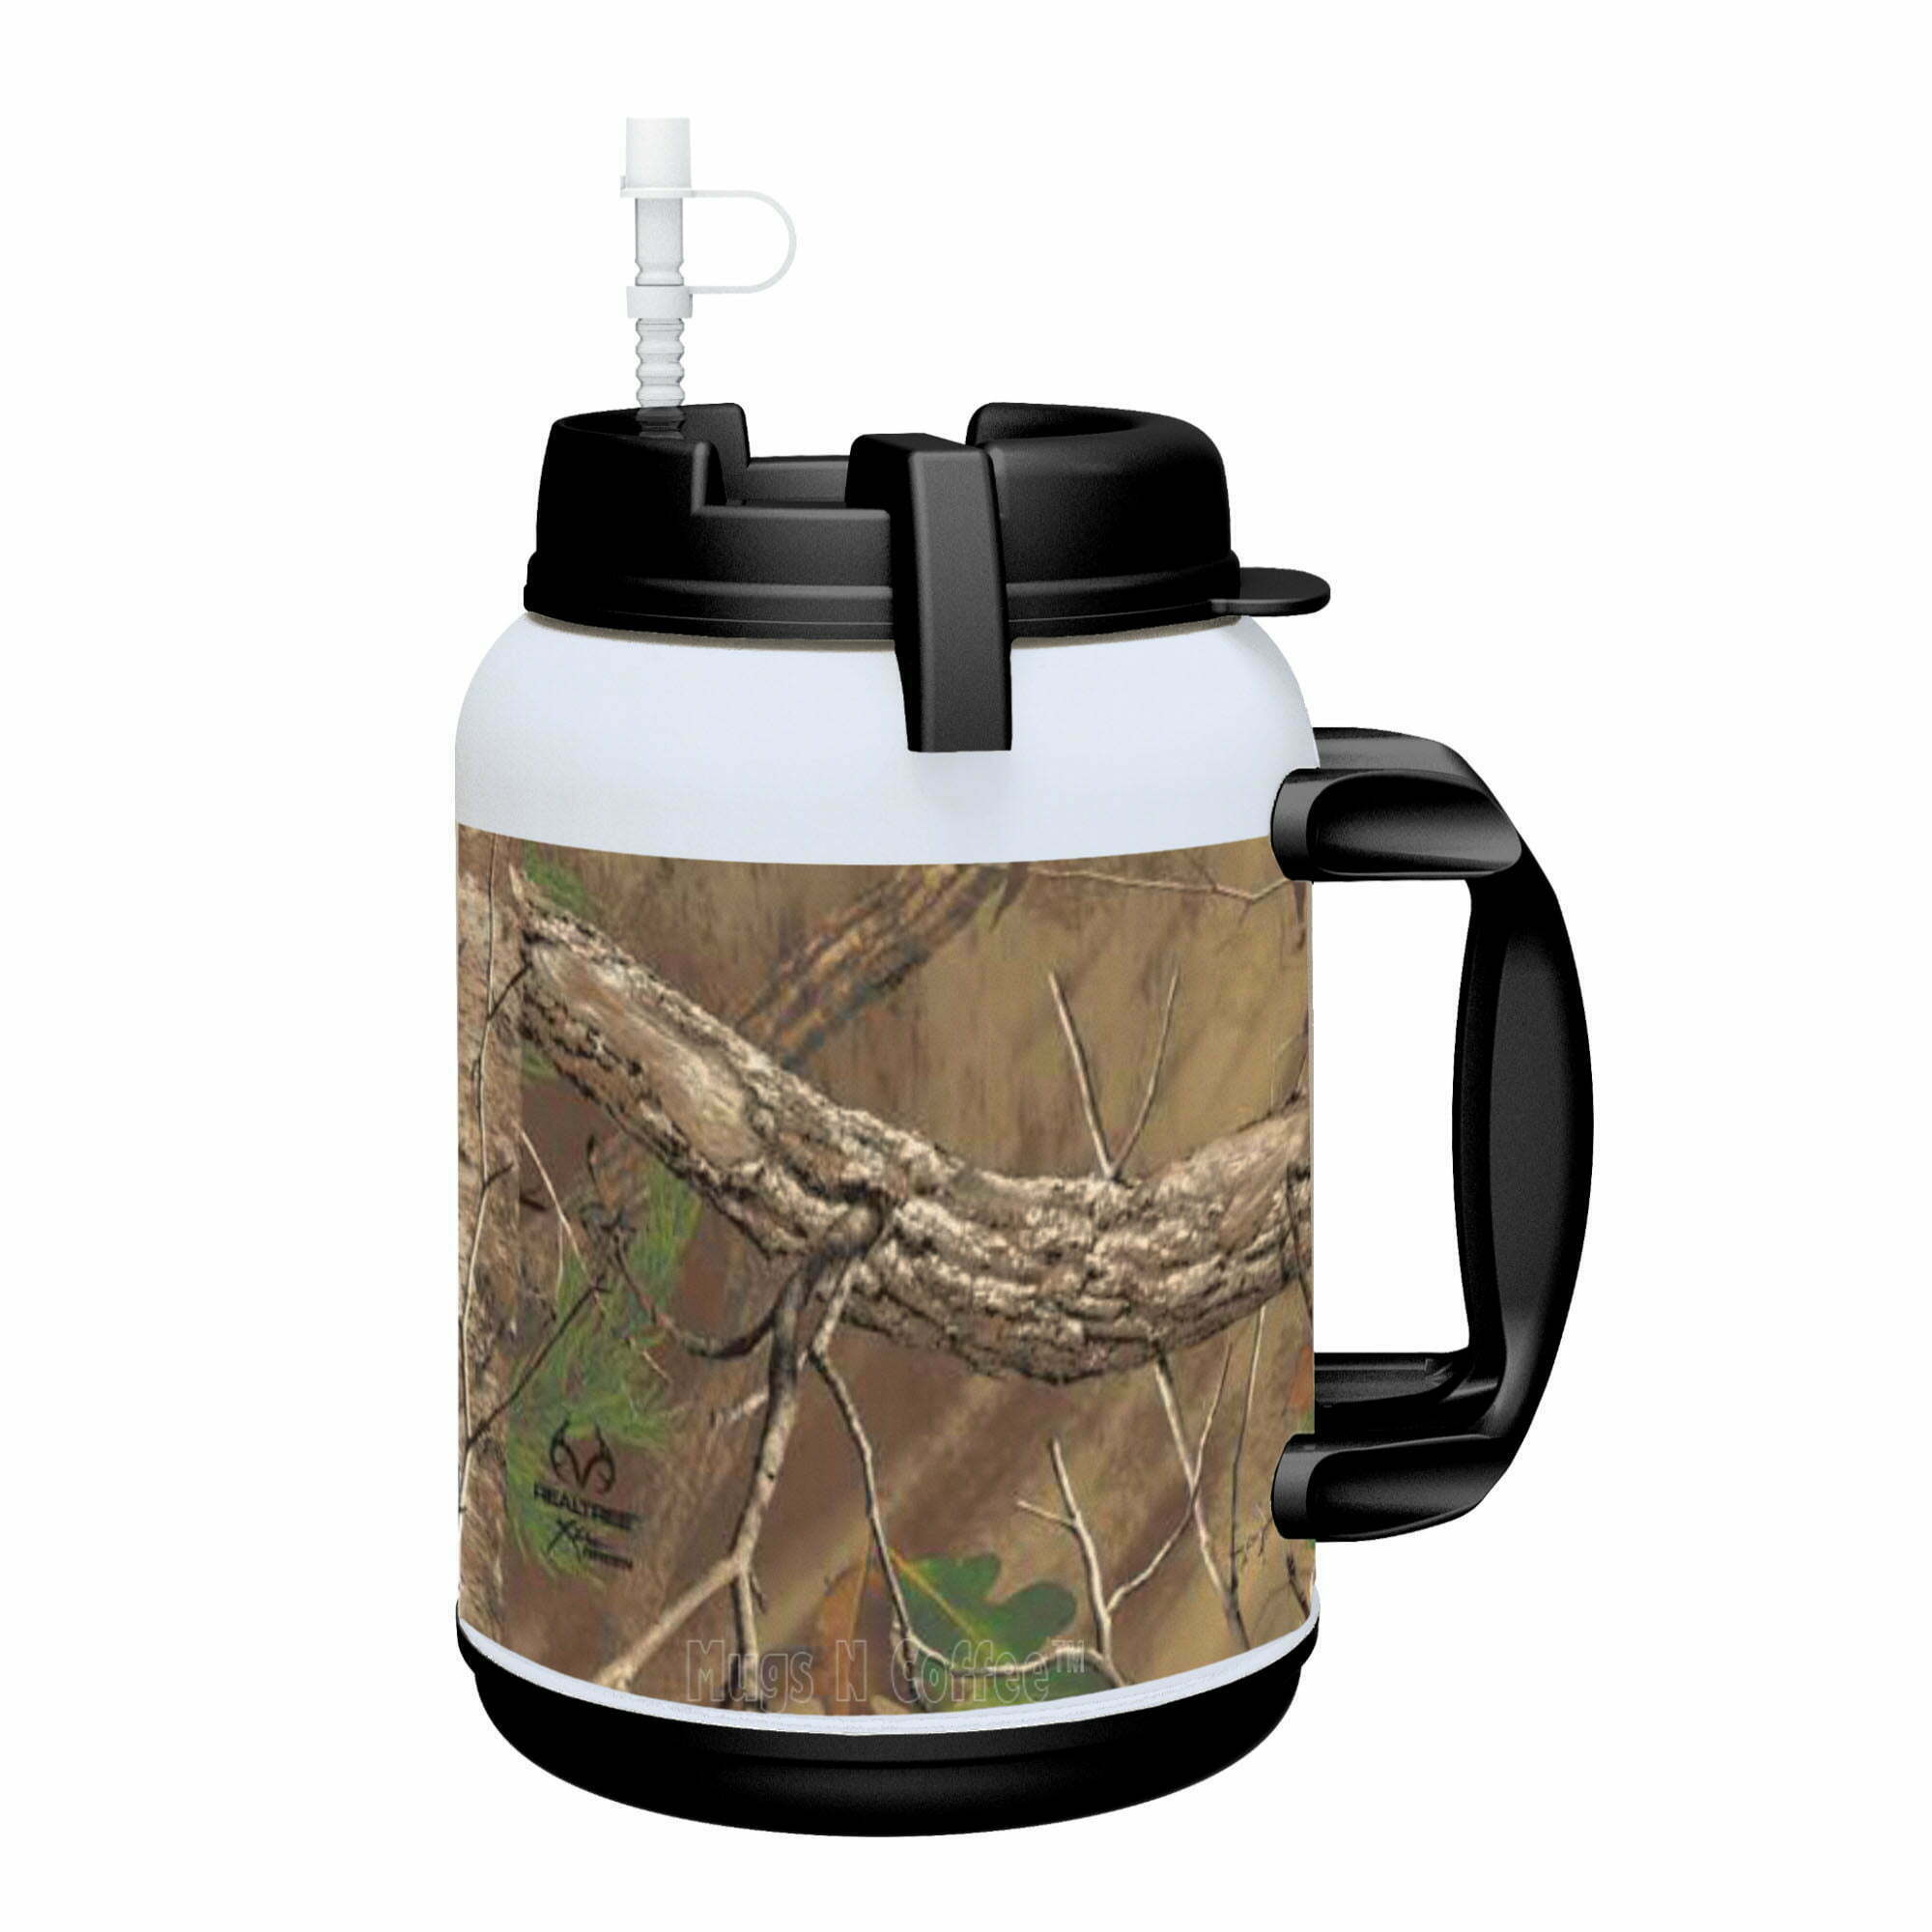 https://www.mugsncoffee.com/wp-content/uploads/2022/03/64-oz-Realtree-Insulated-Mug-Travel-Mug-with-Large-Carry-Handle-and-Straw-1-1.jpg